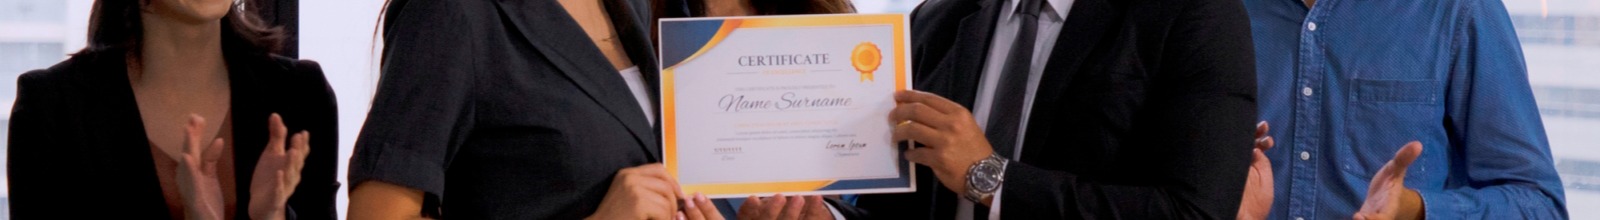 Certificate_Award